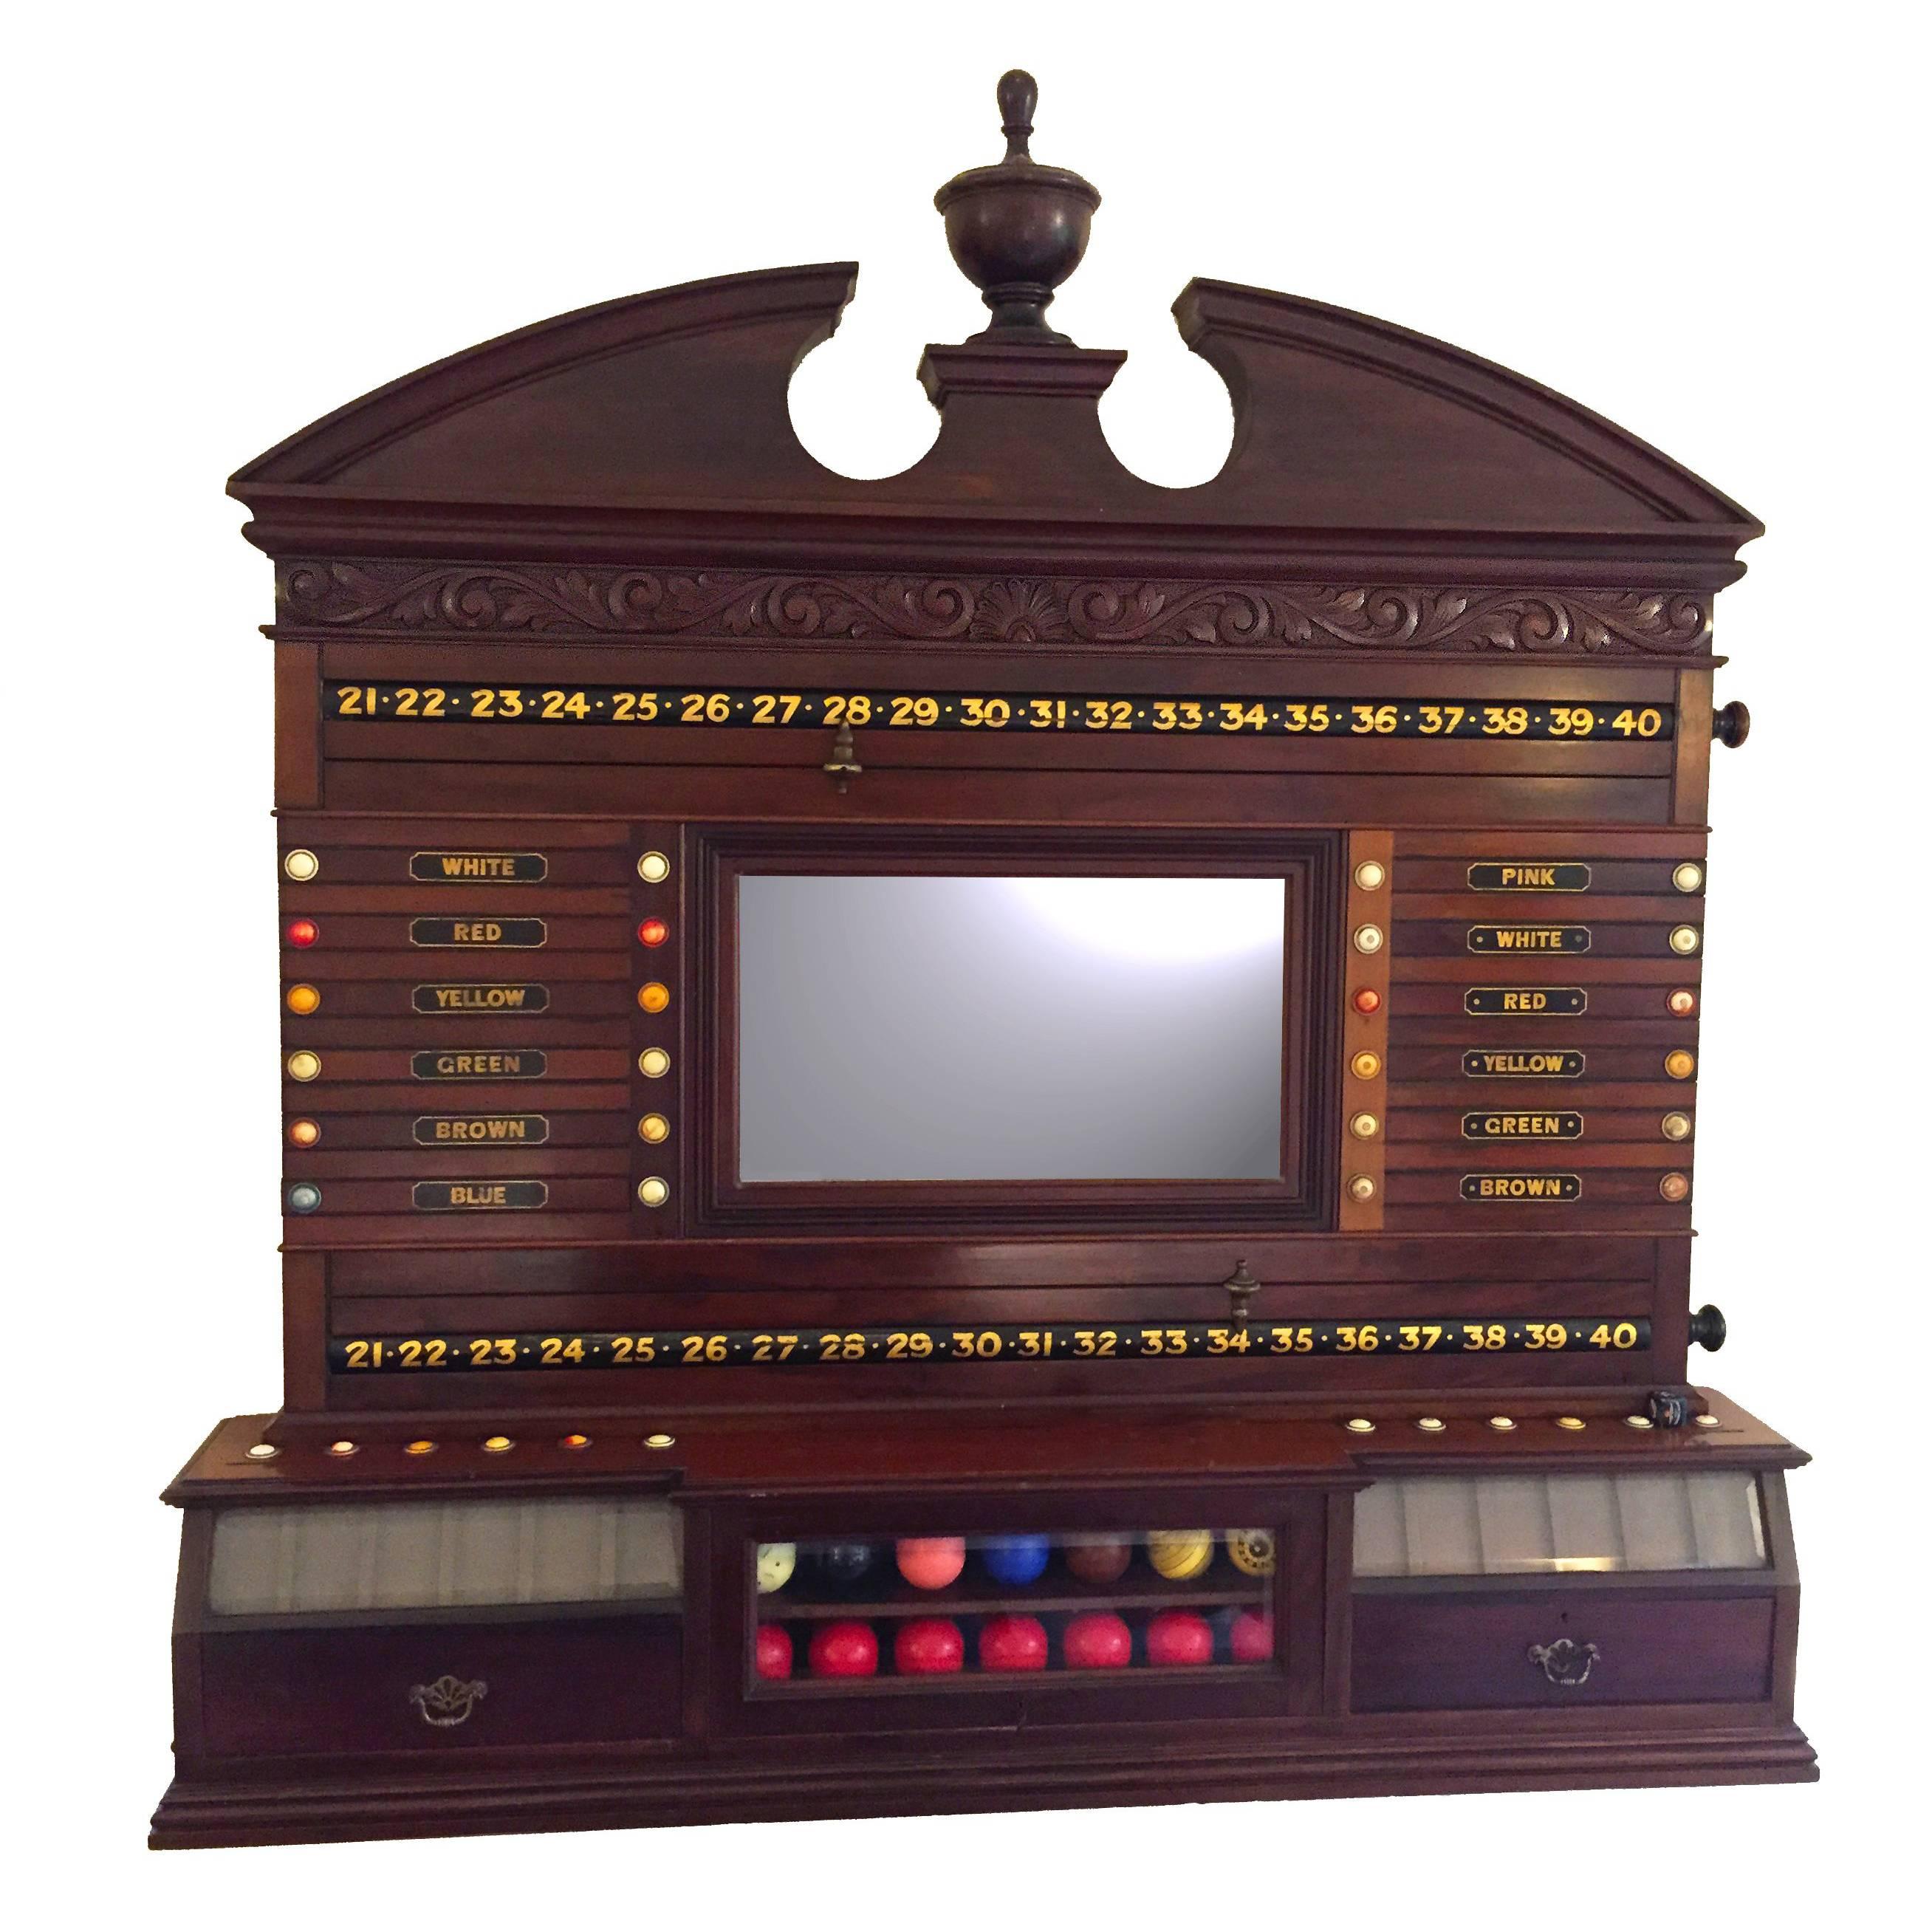 Antique Billiards Snooker Life Pool Scoring Cabinet